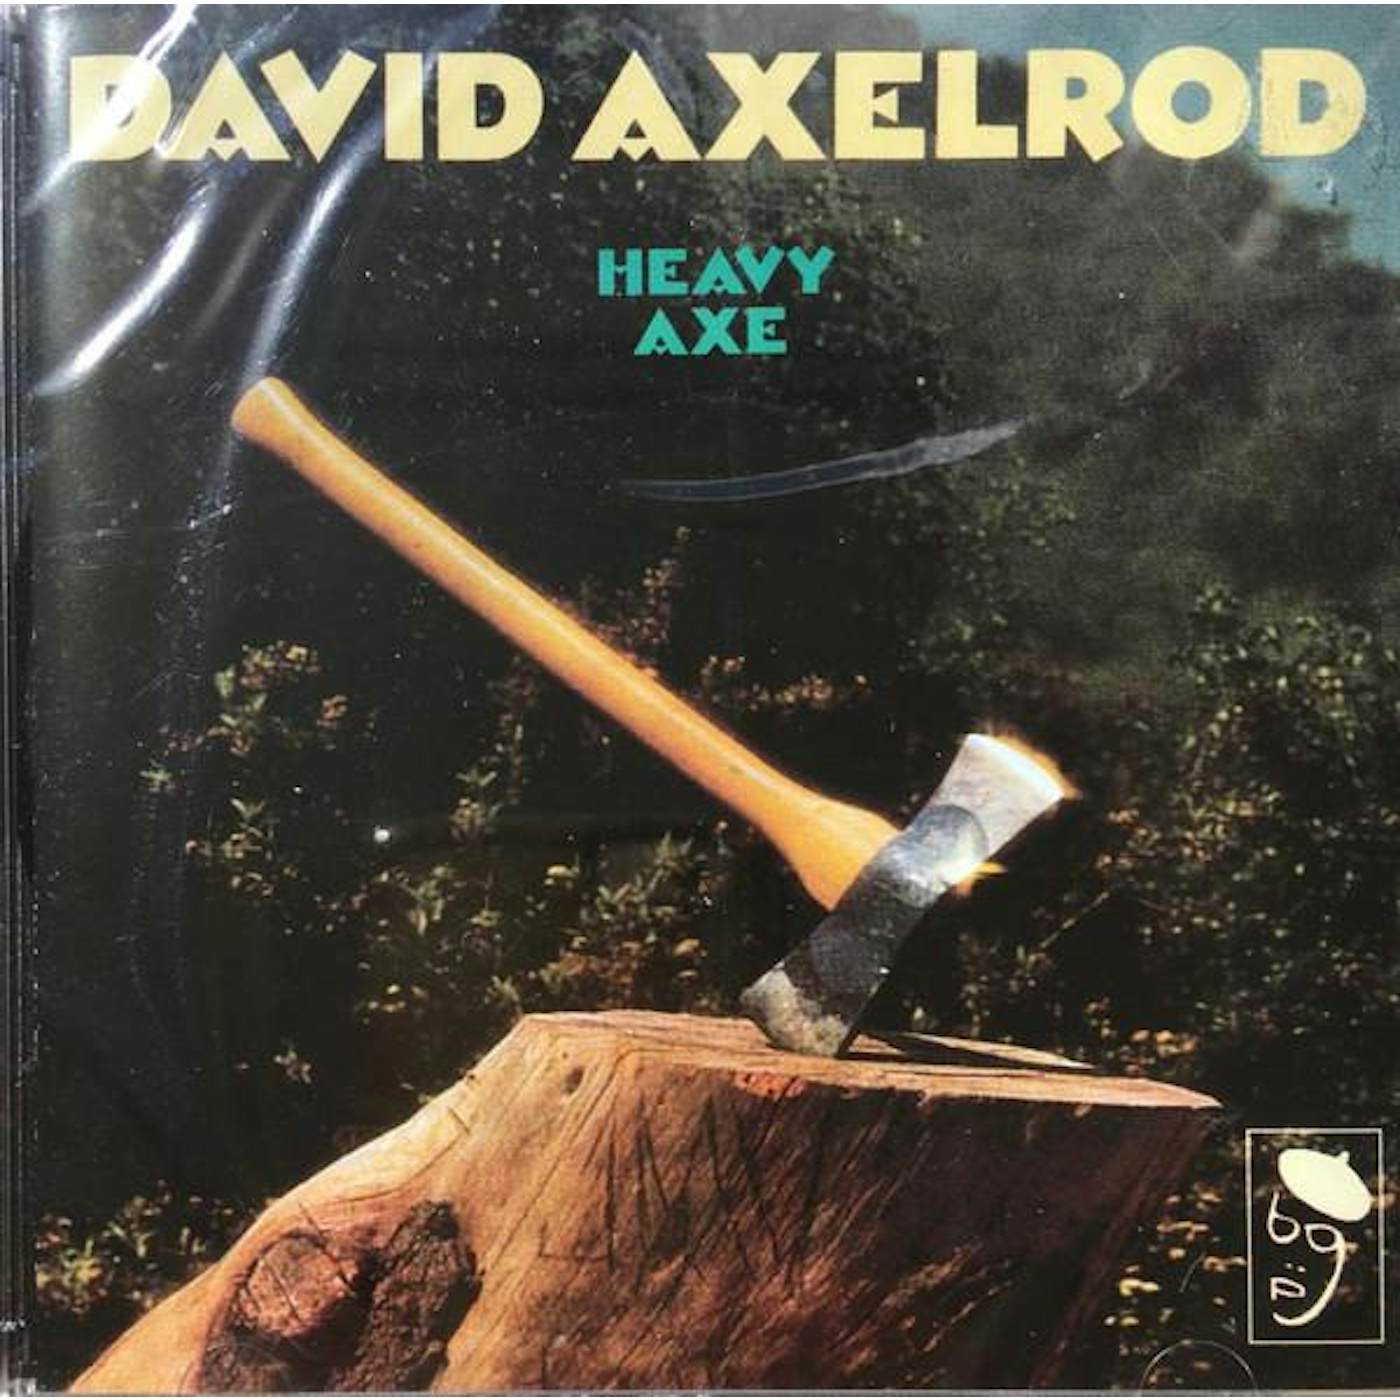 David Axelrod HEAVY AXE CD